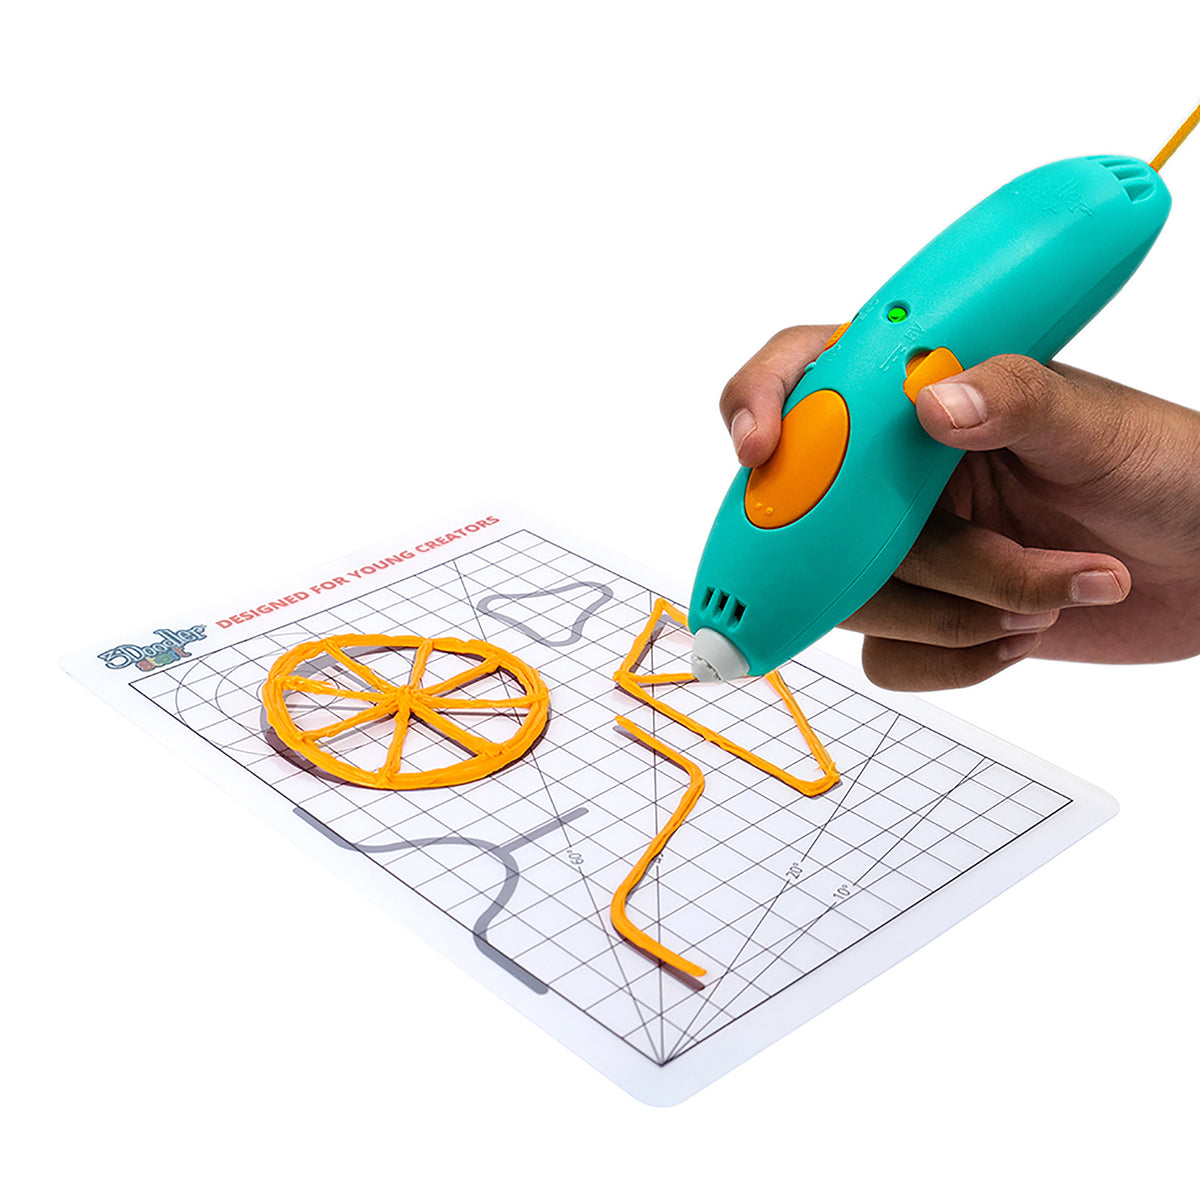 3D Drawing Pen for Kids: 3Doodler Start Review